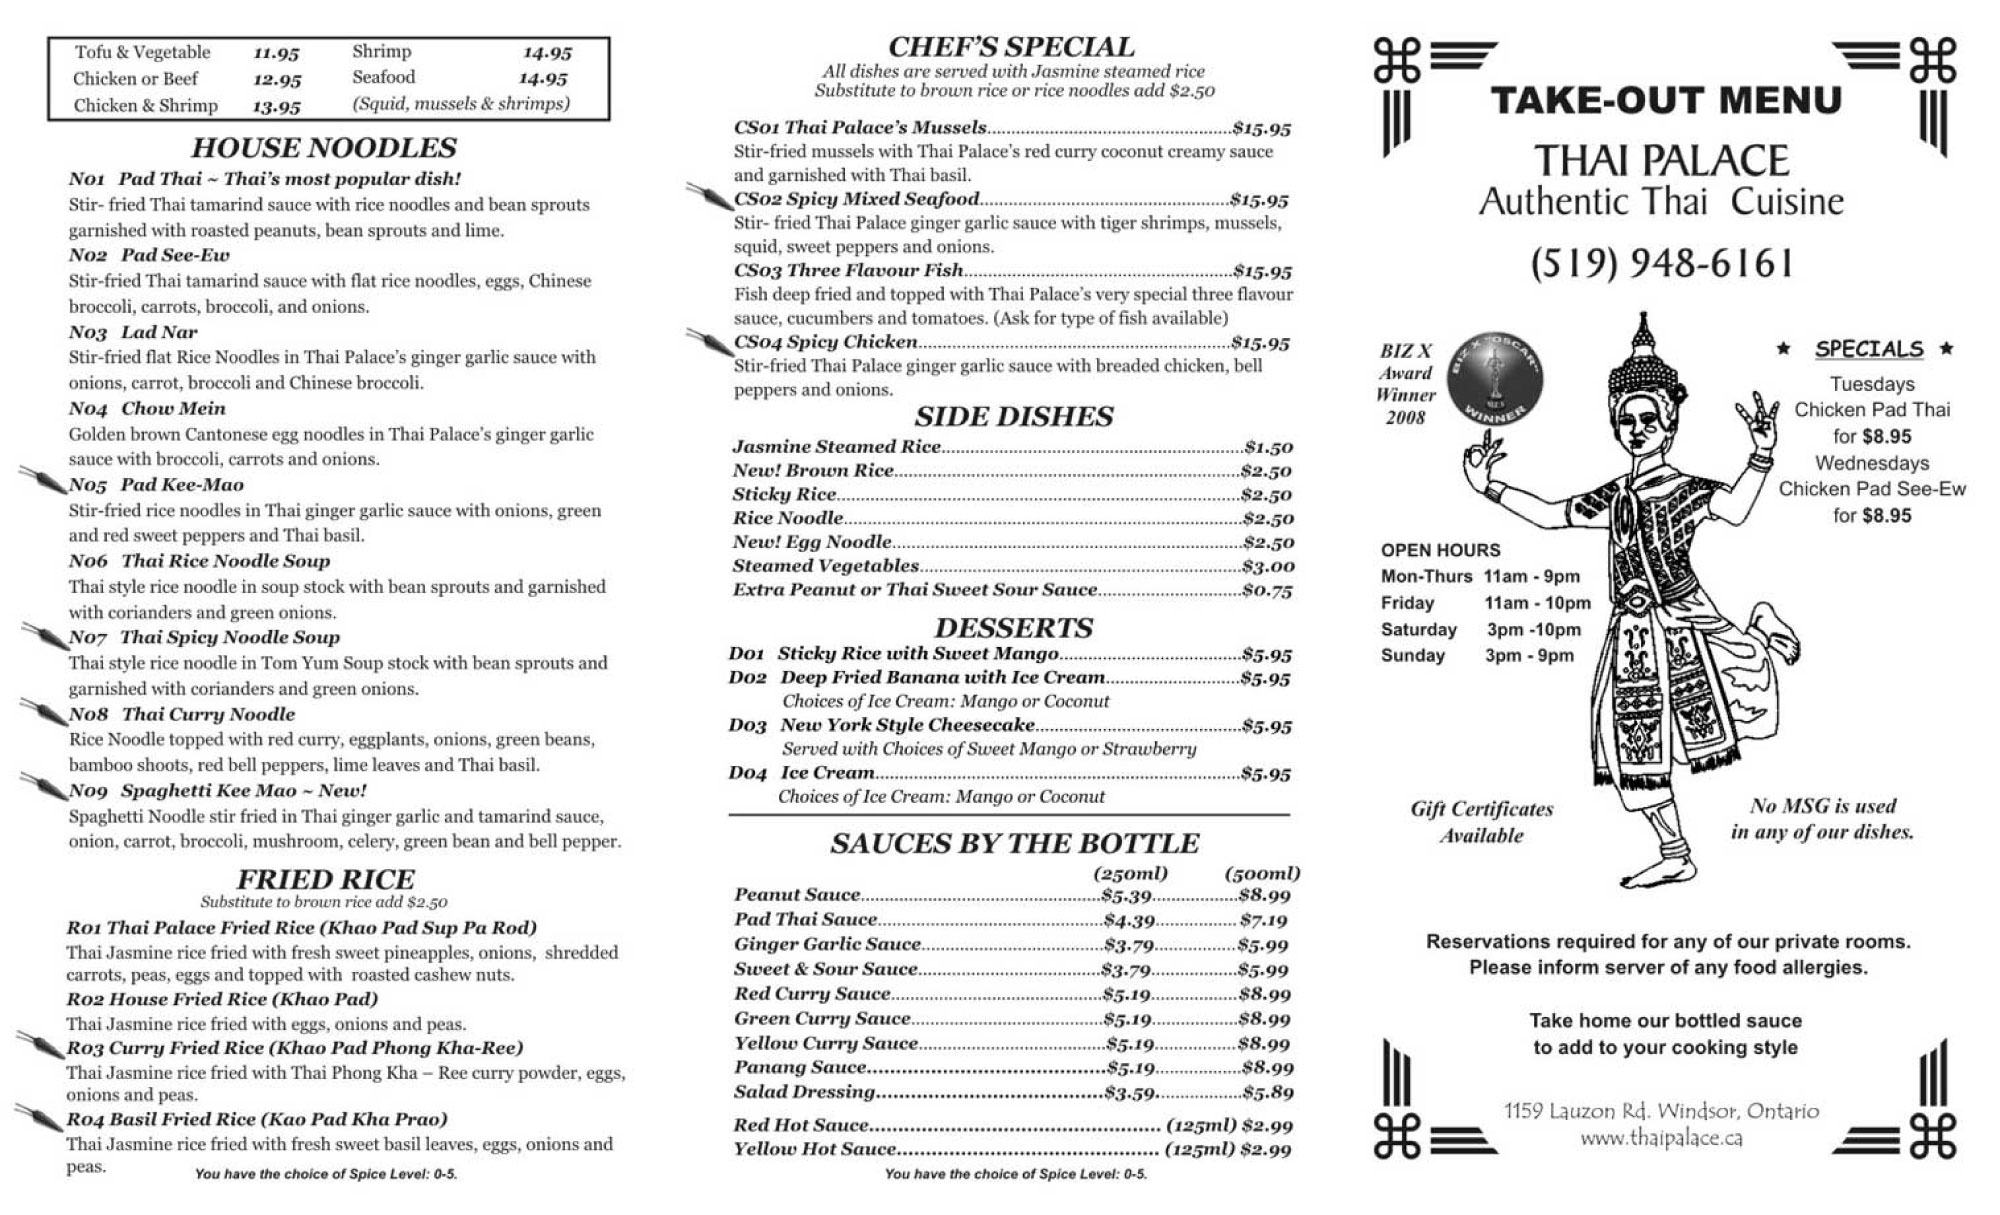 Thai Palace Restaurant Menu - Page 1!